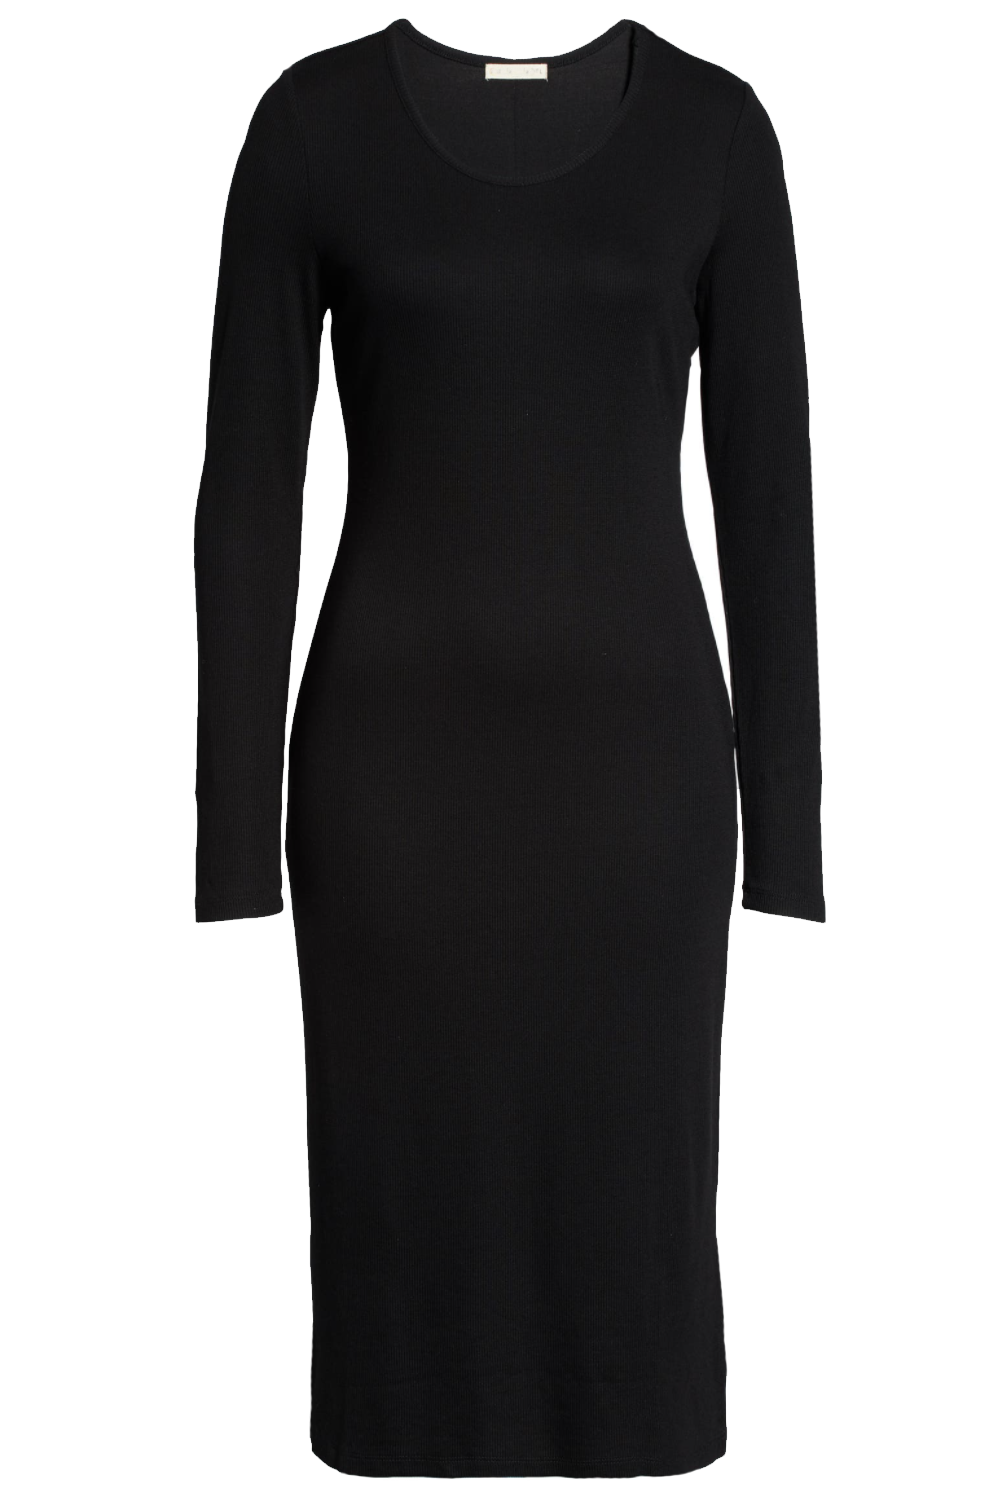 Glow Fashion Boutique Long Sleeve Black Midi Dress